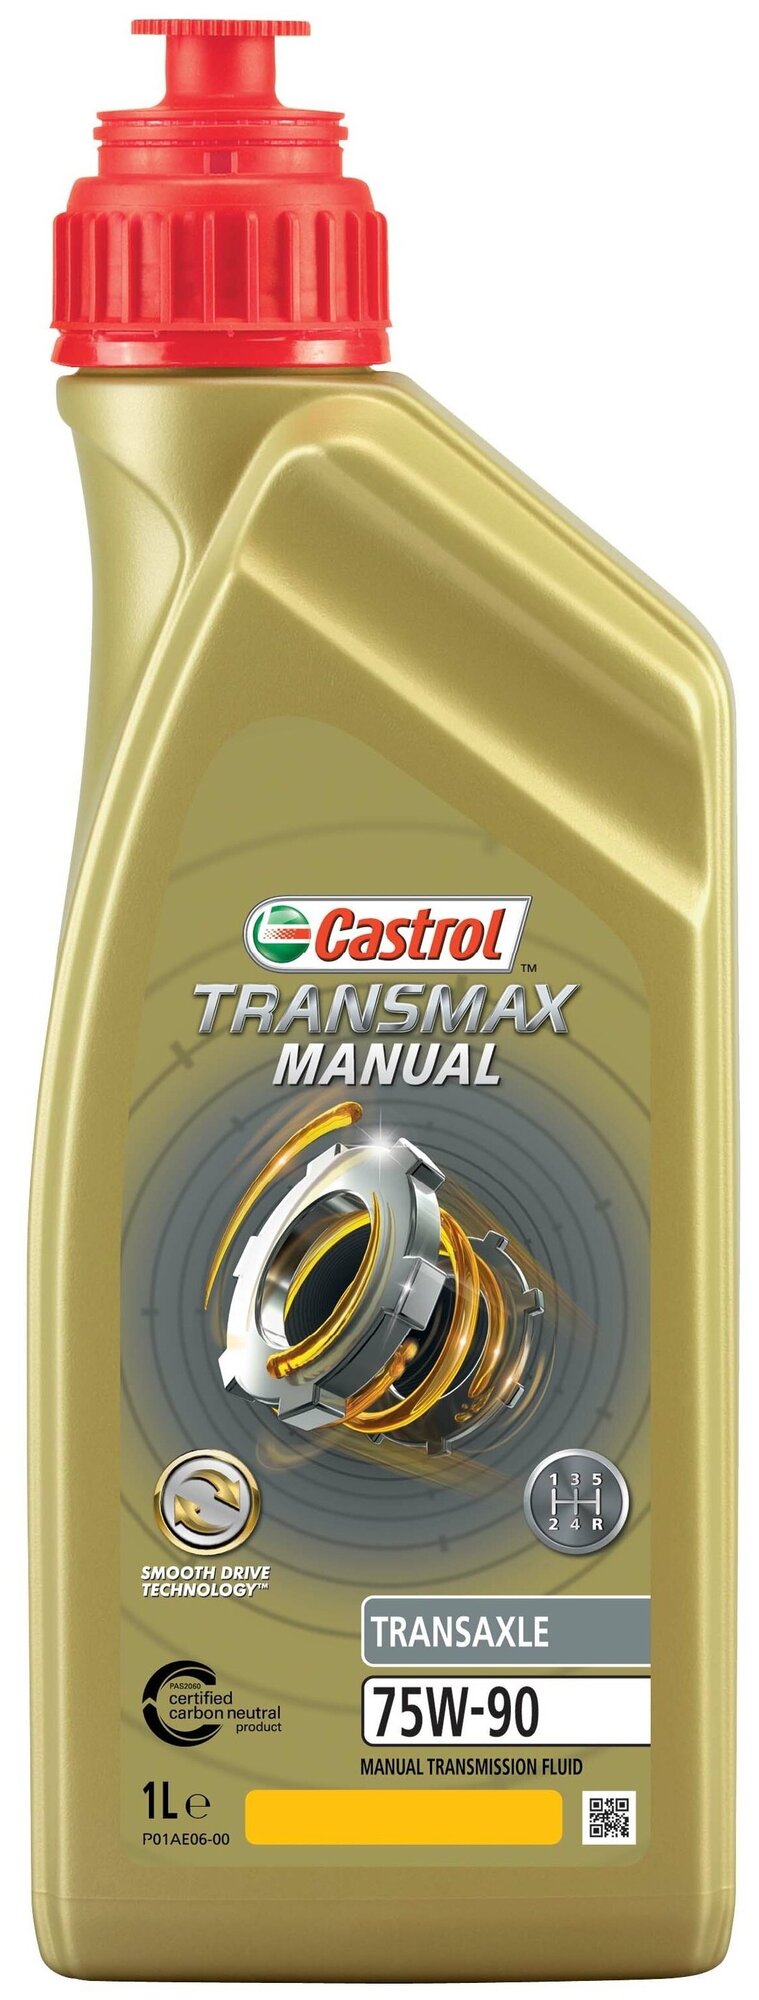 Масло Трансмиссионное Castrol Transmax Transaxle 75w90 Gl-4 Для Мкпп (1 Л) Castrol арт. 15D705